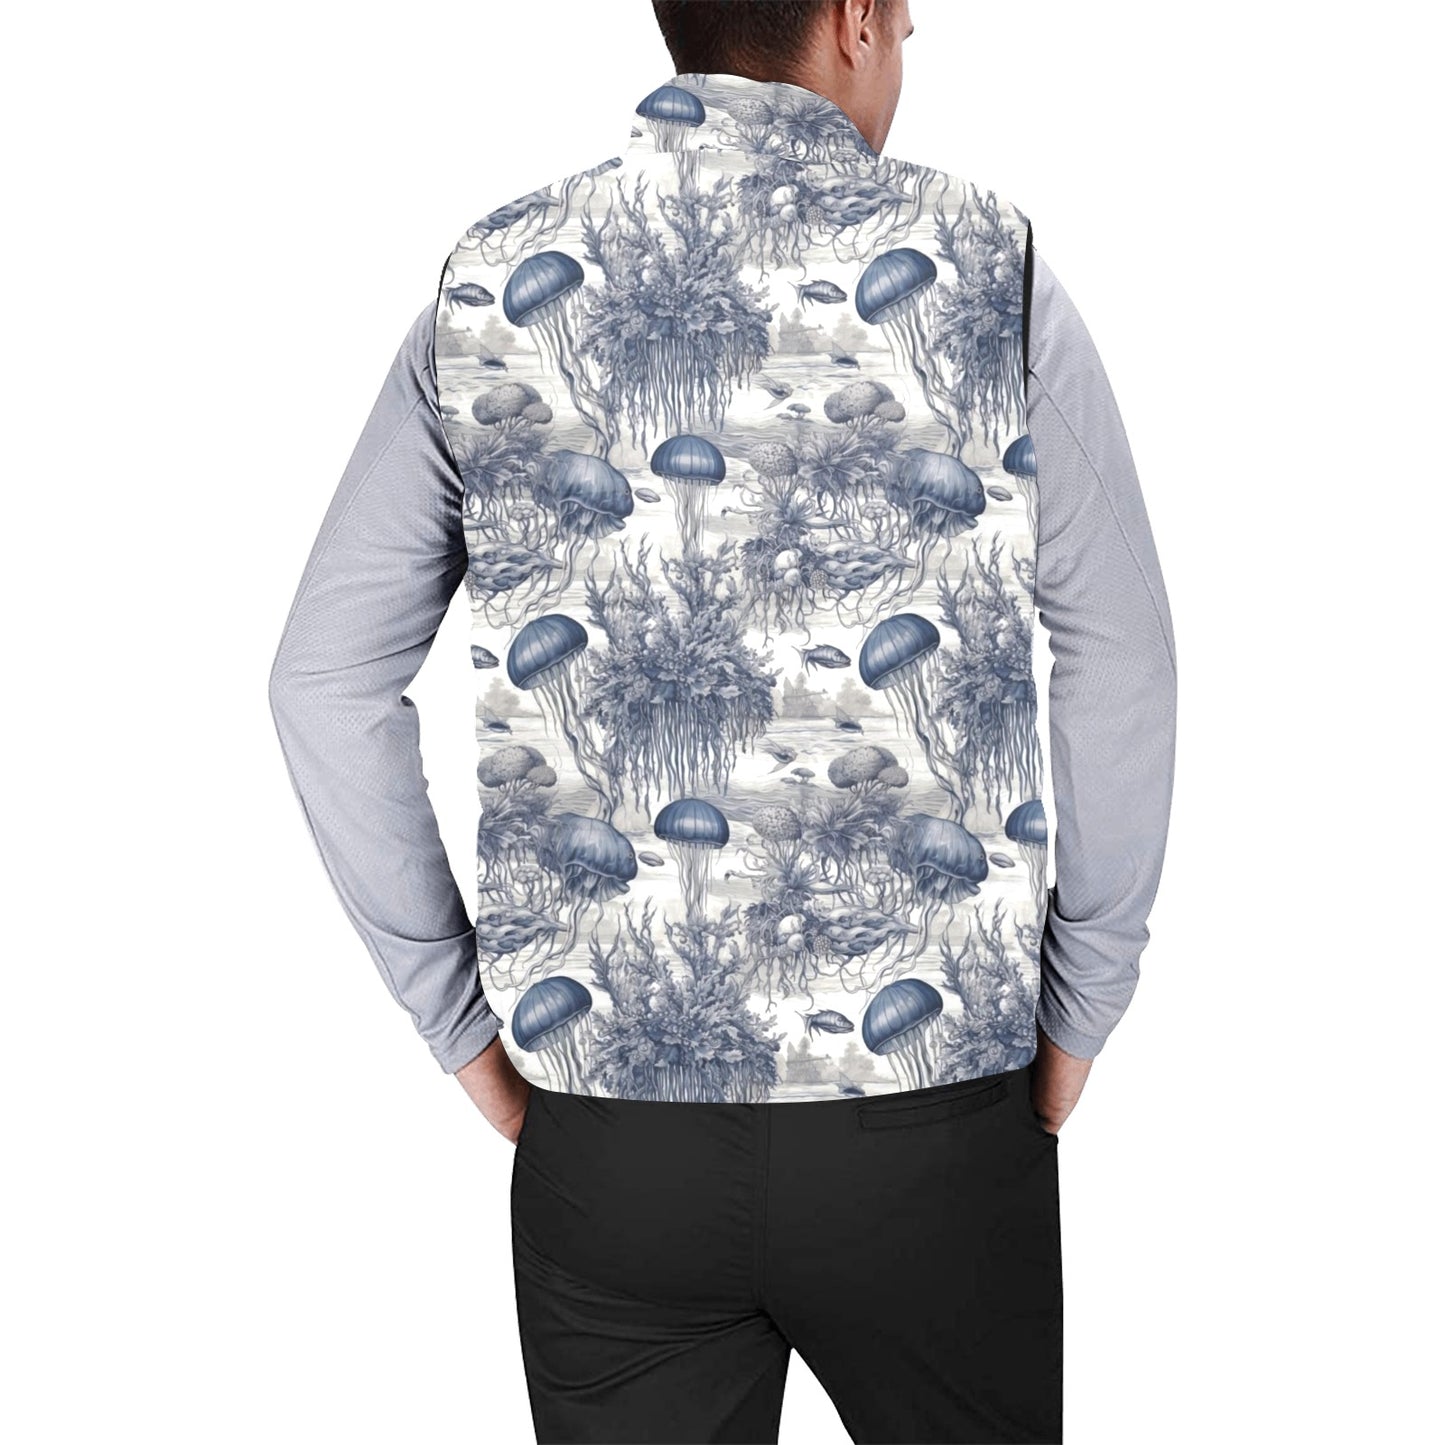 Puffer Vest Men's in Toile de Jouy Jellyfish Print